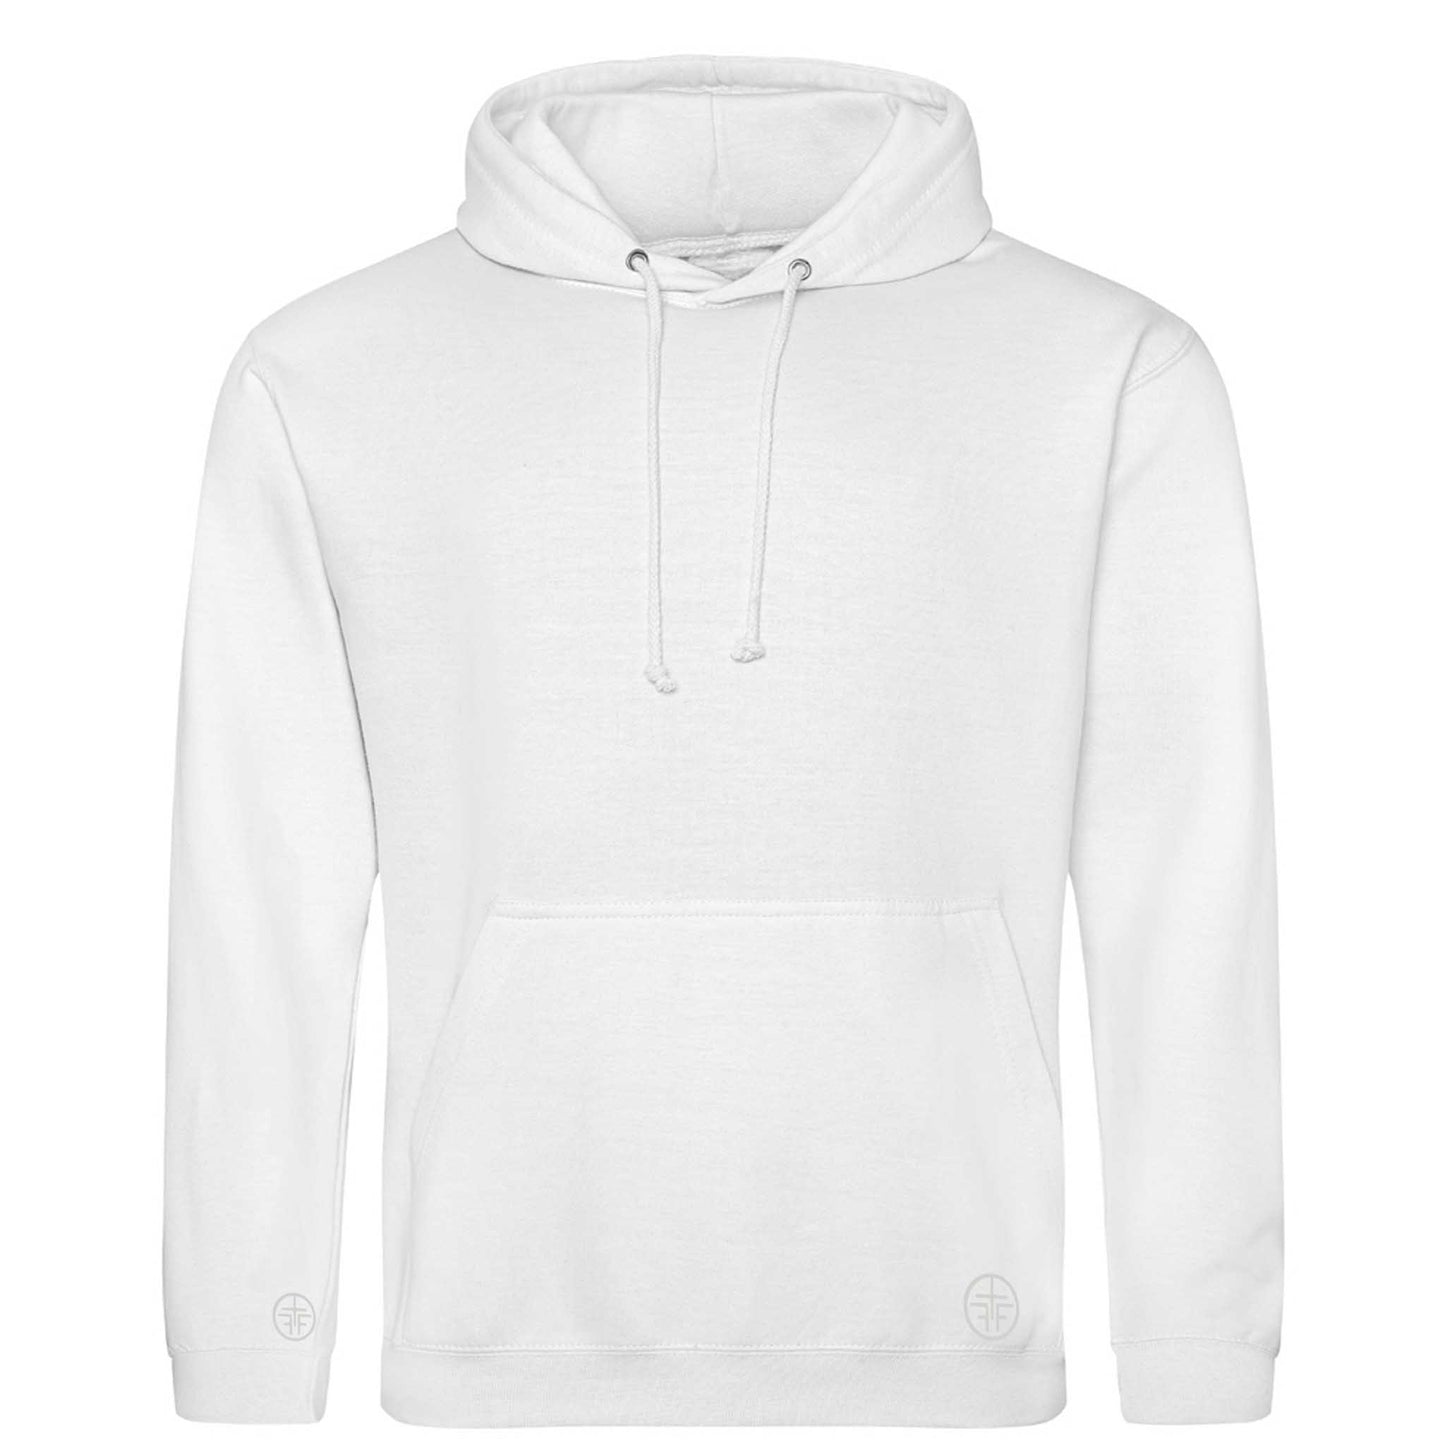 FARA - Hooded Sweater - White